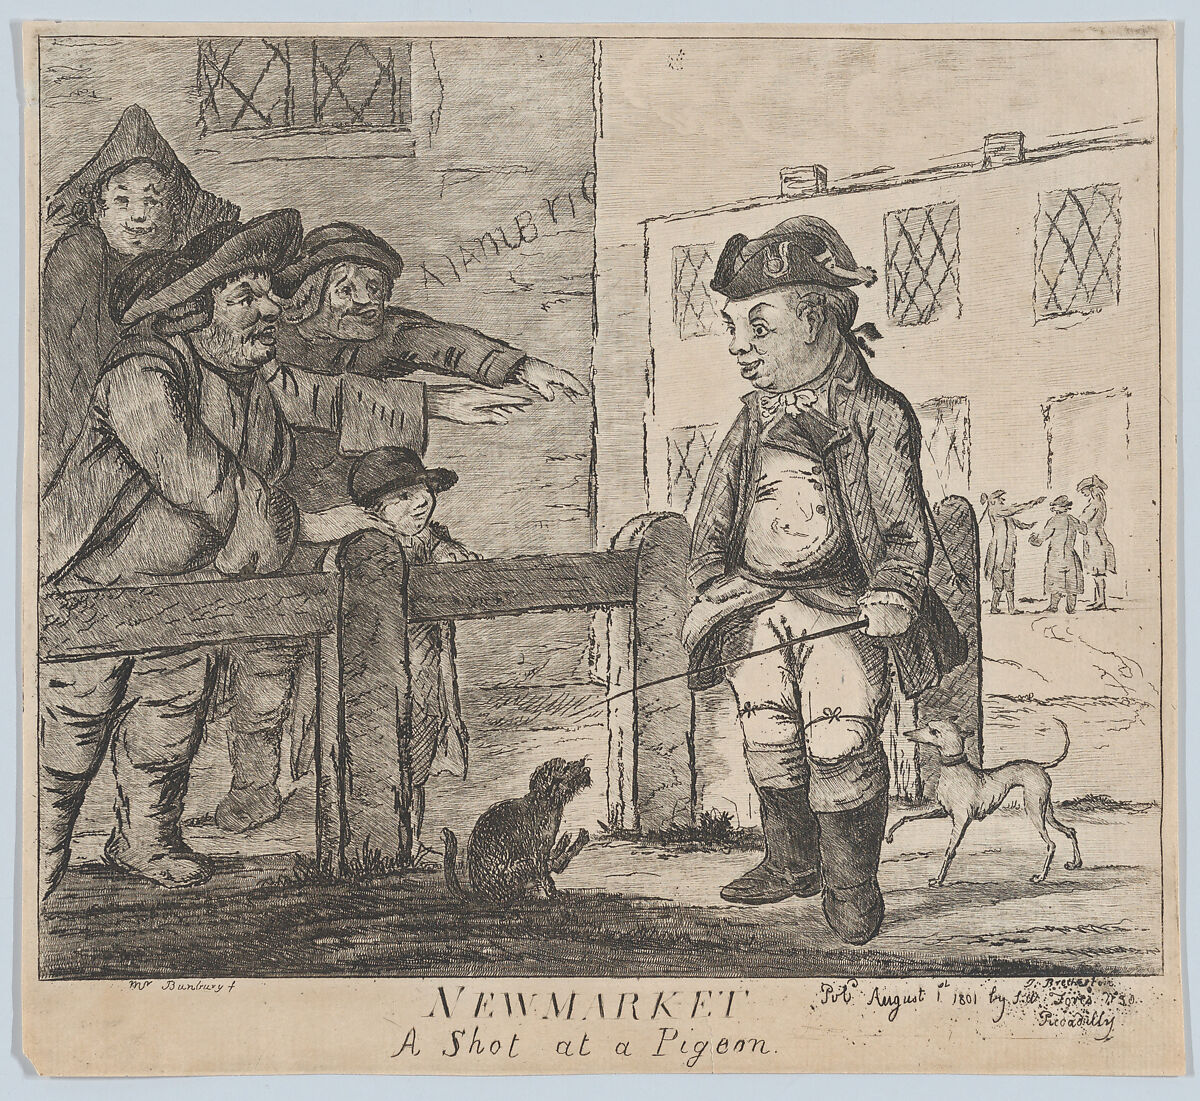 Newmarket: A Shot at a Pigeon, James Bretherton (British, active 1750–99), Etching 